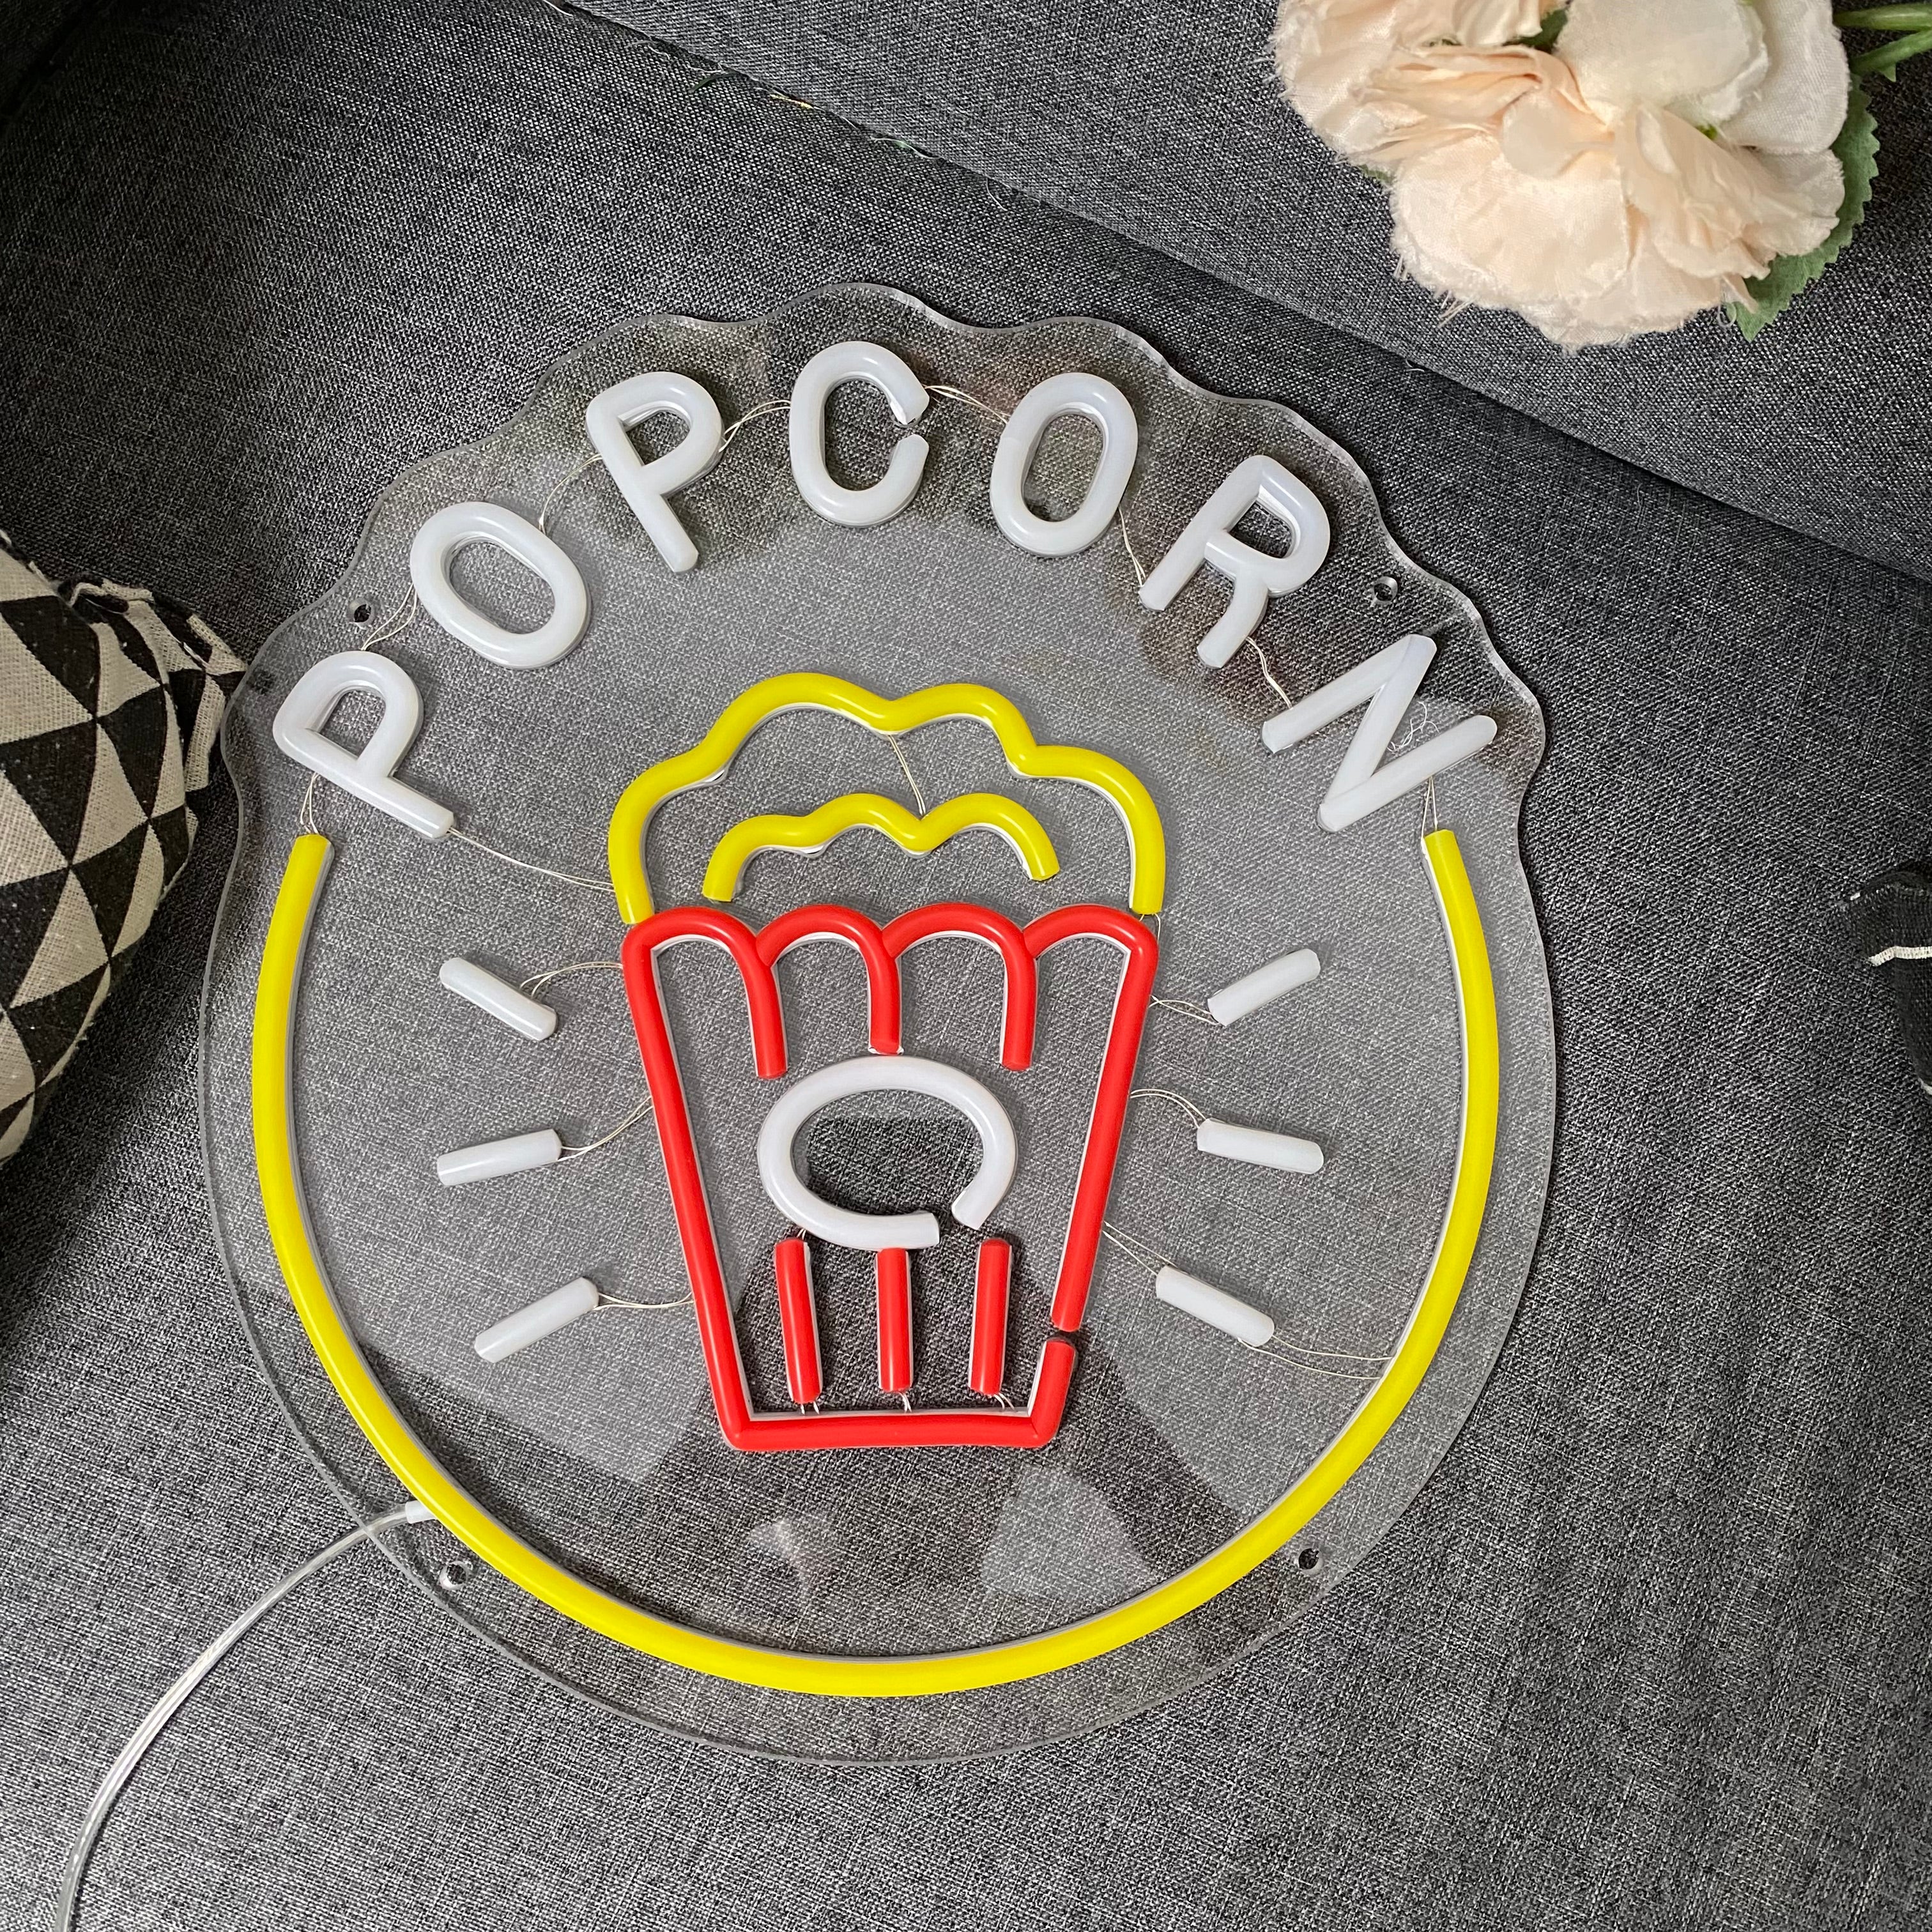 PopCorn Led Neon Light For Cinema Food Cart Carnivals and Celebrations Decorations